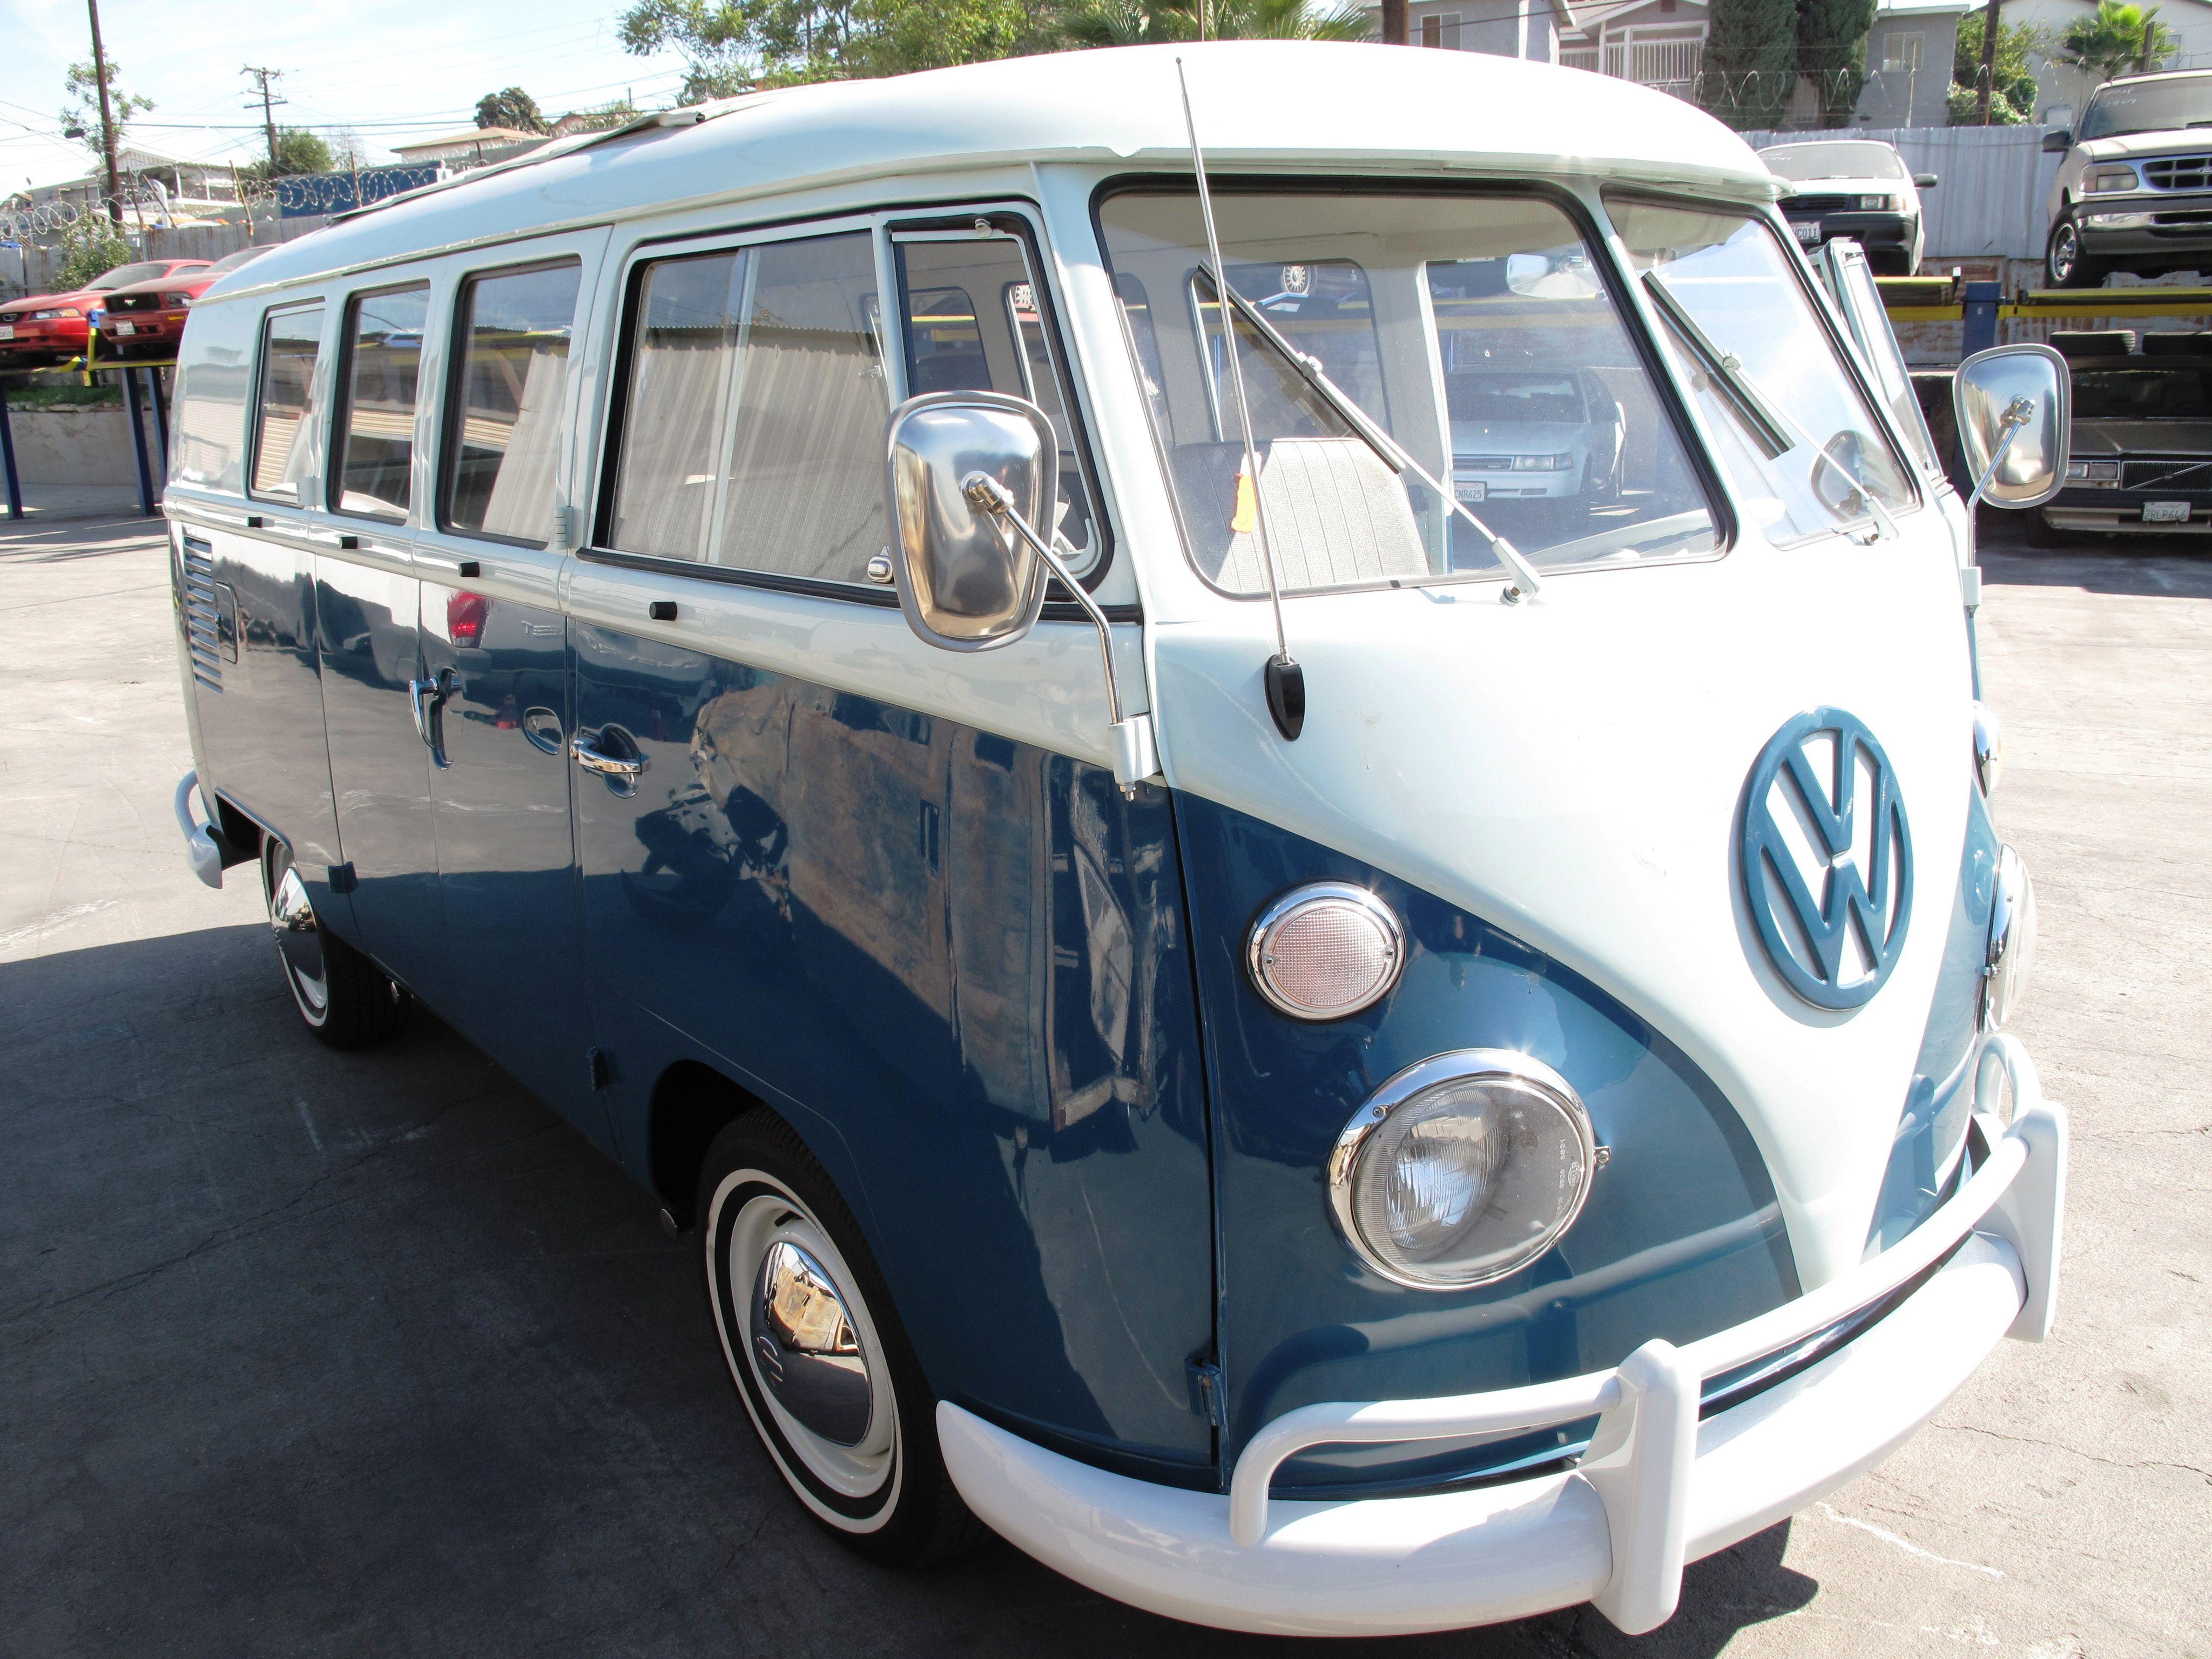 Long, strange trip ending for Volkswagen hippie van as production to halt in Brazil